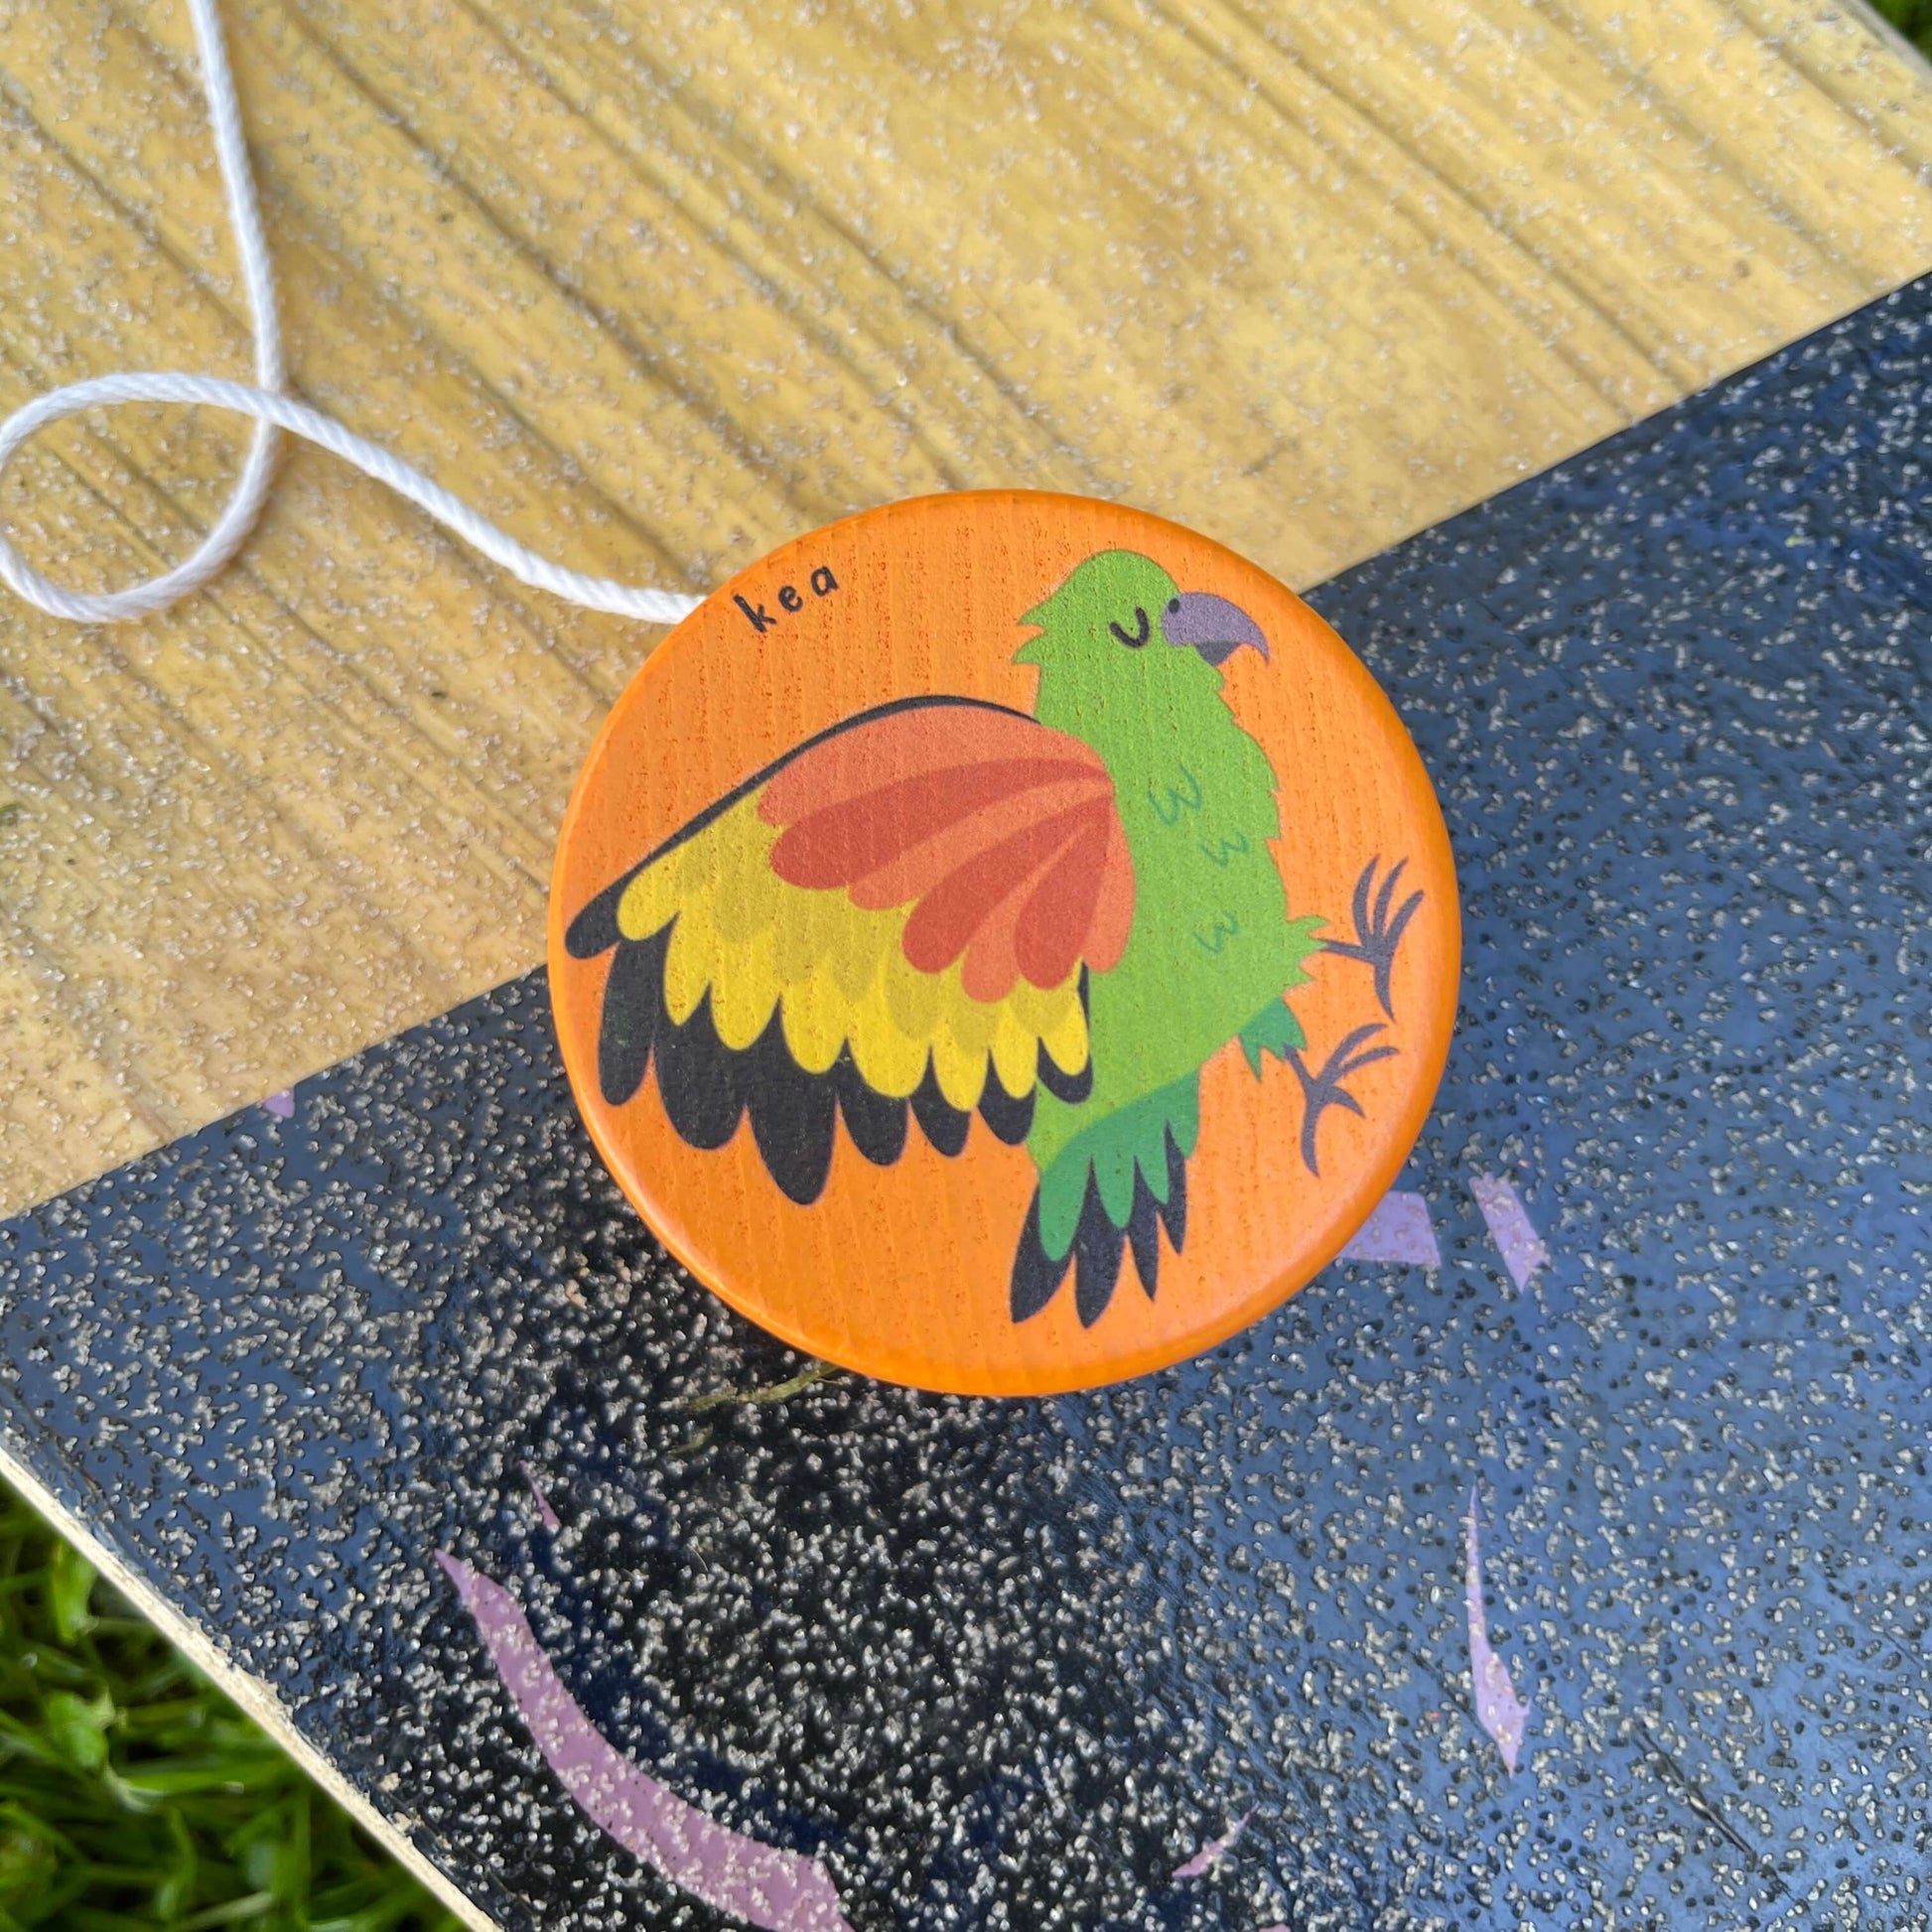 A bright orange wooden yoyo with a Kea bird painted on it sitting on a skateboard.